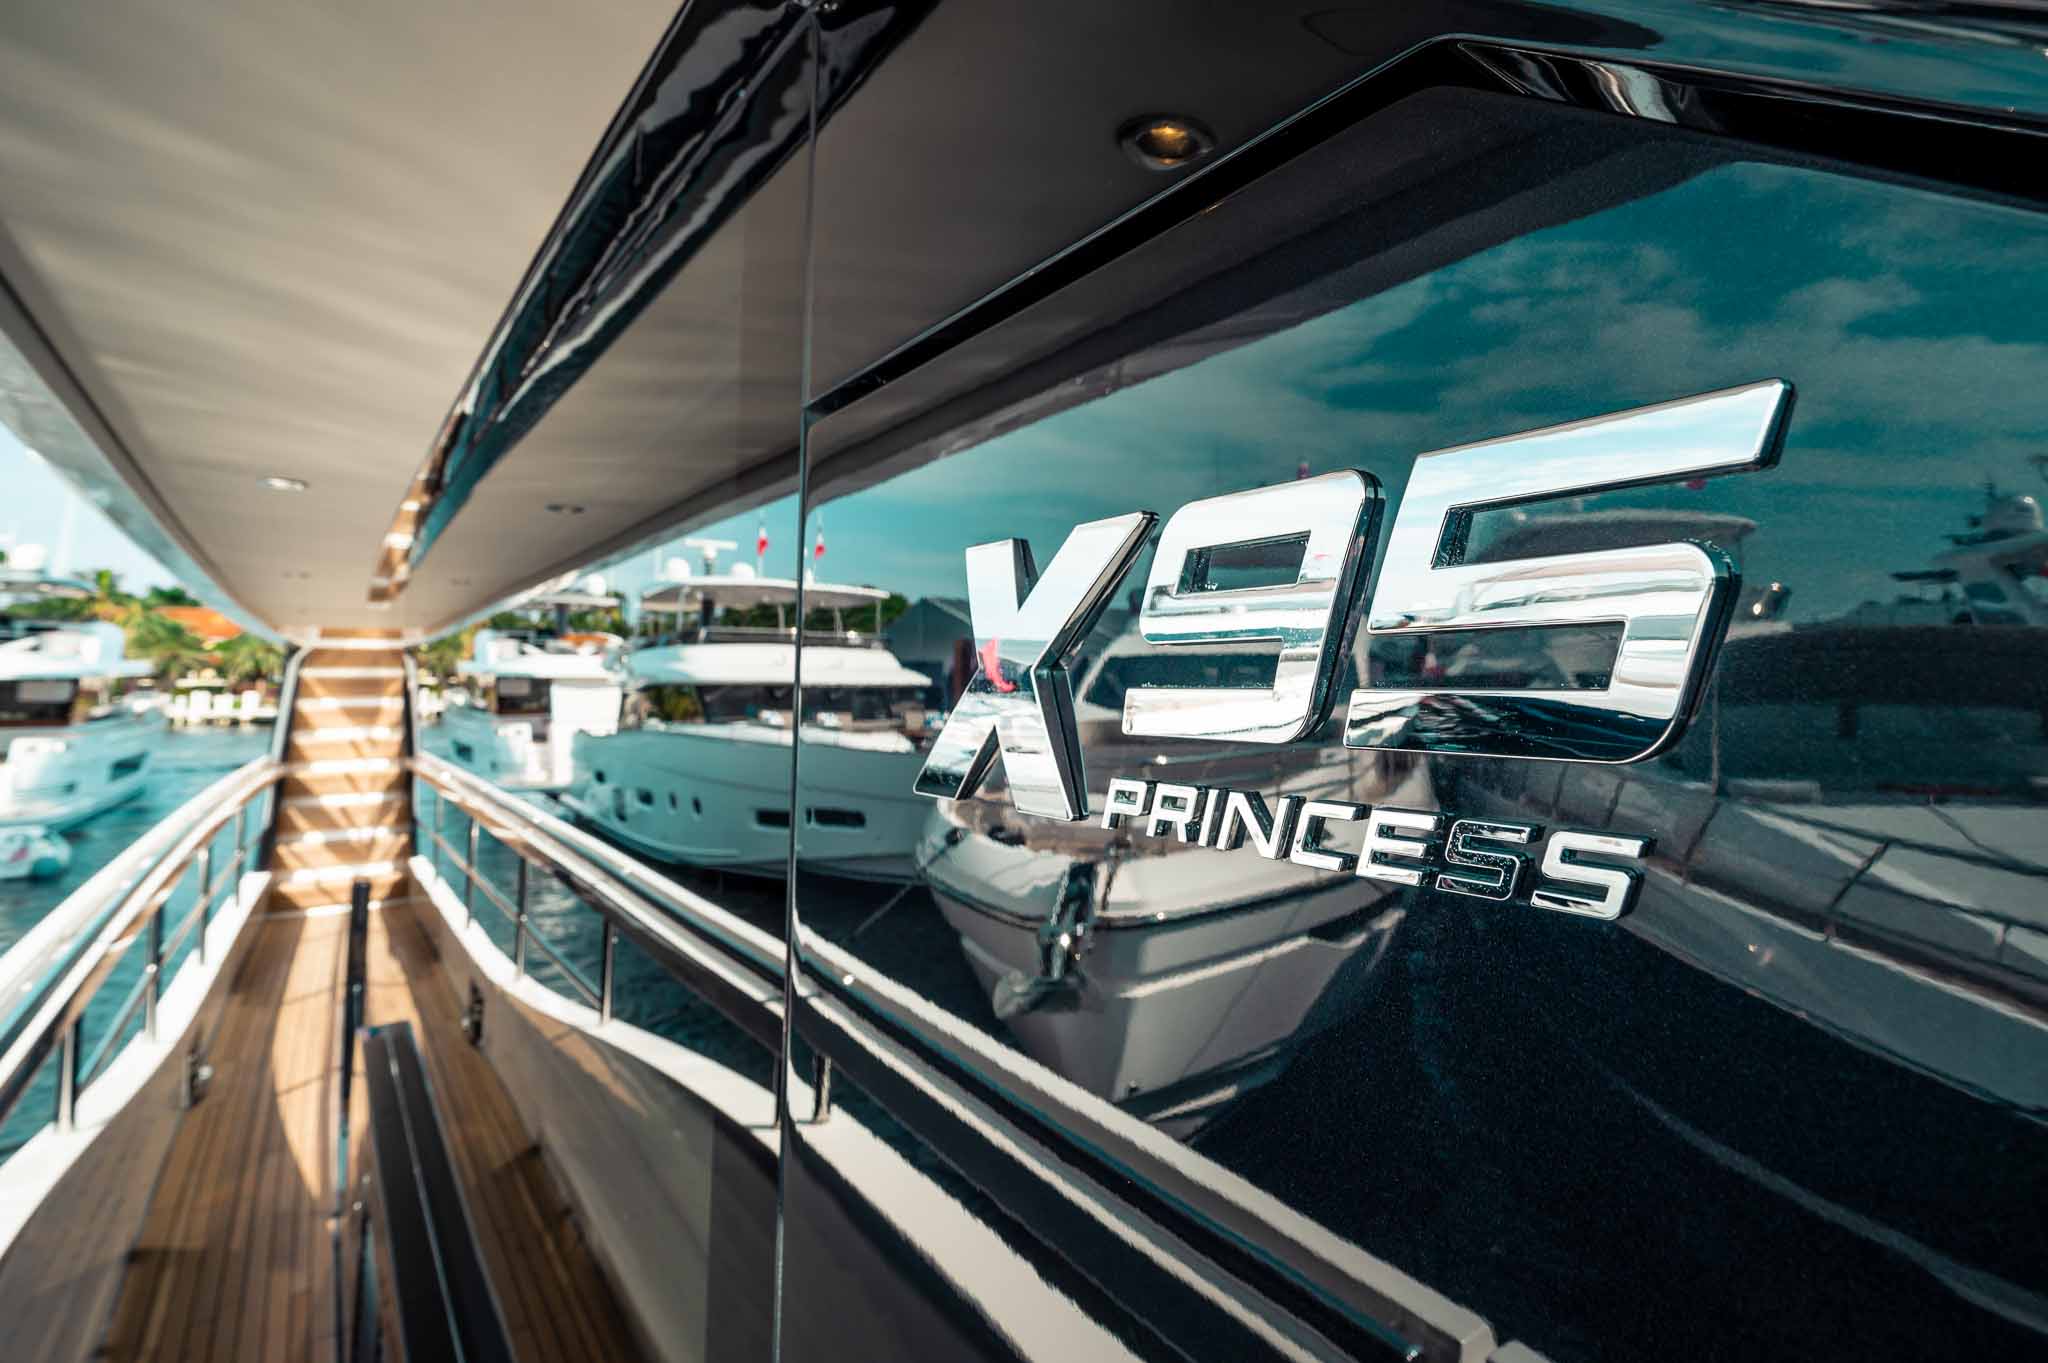 X95 princess motor yacht on display at FLIBS